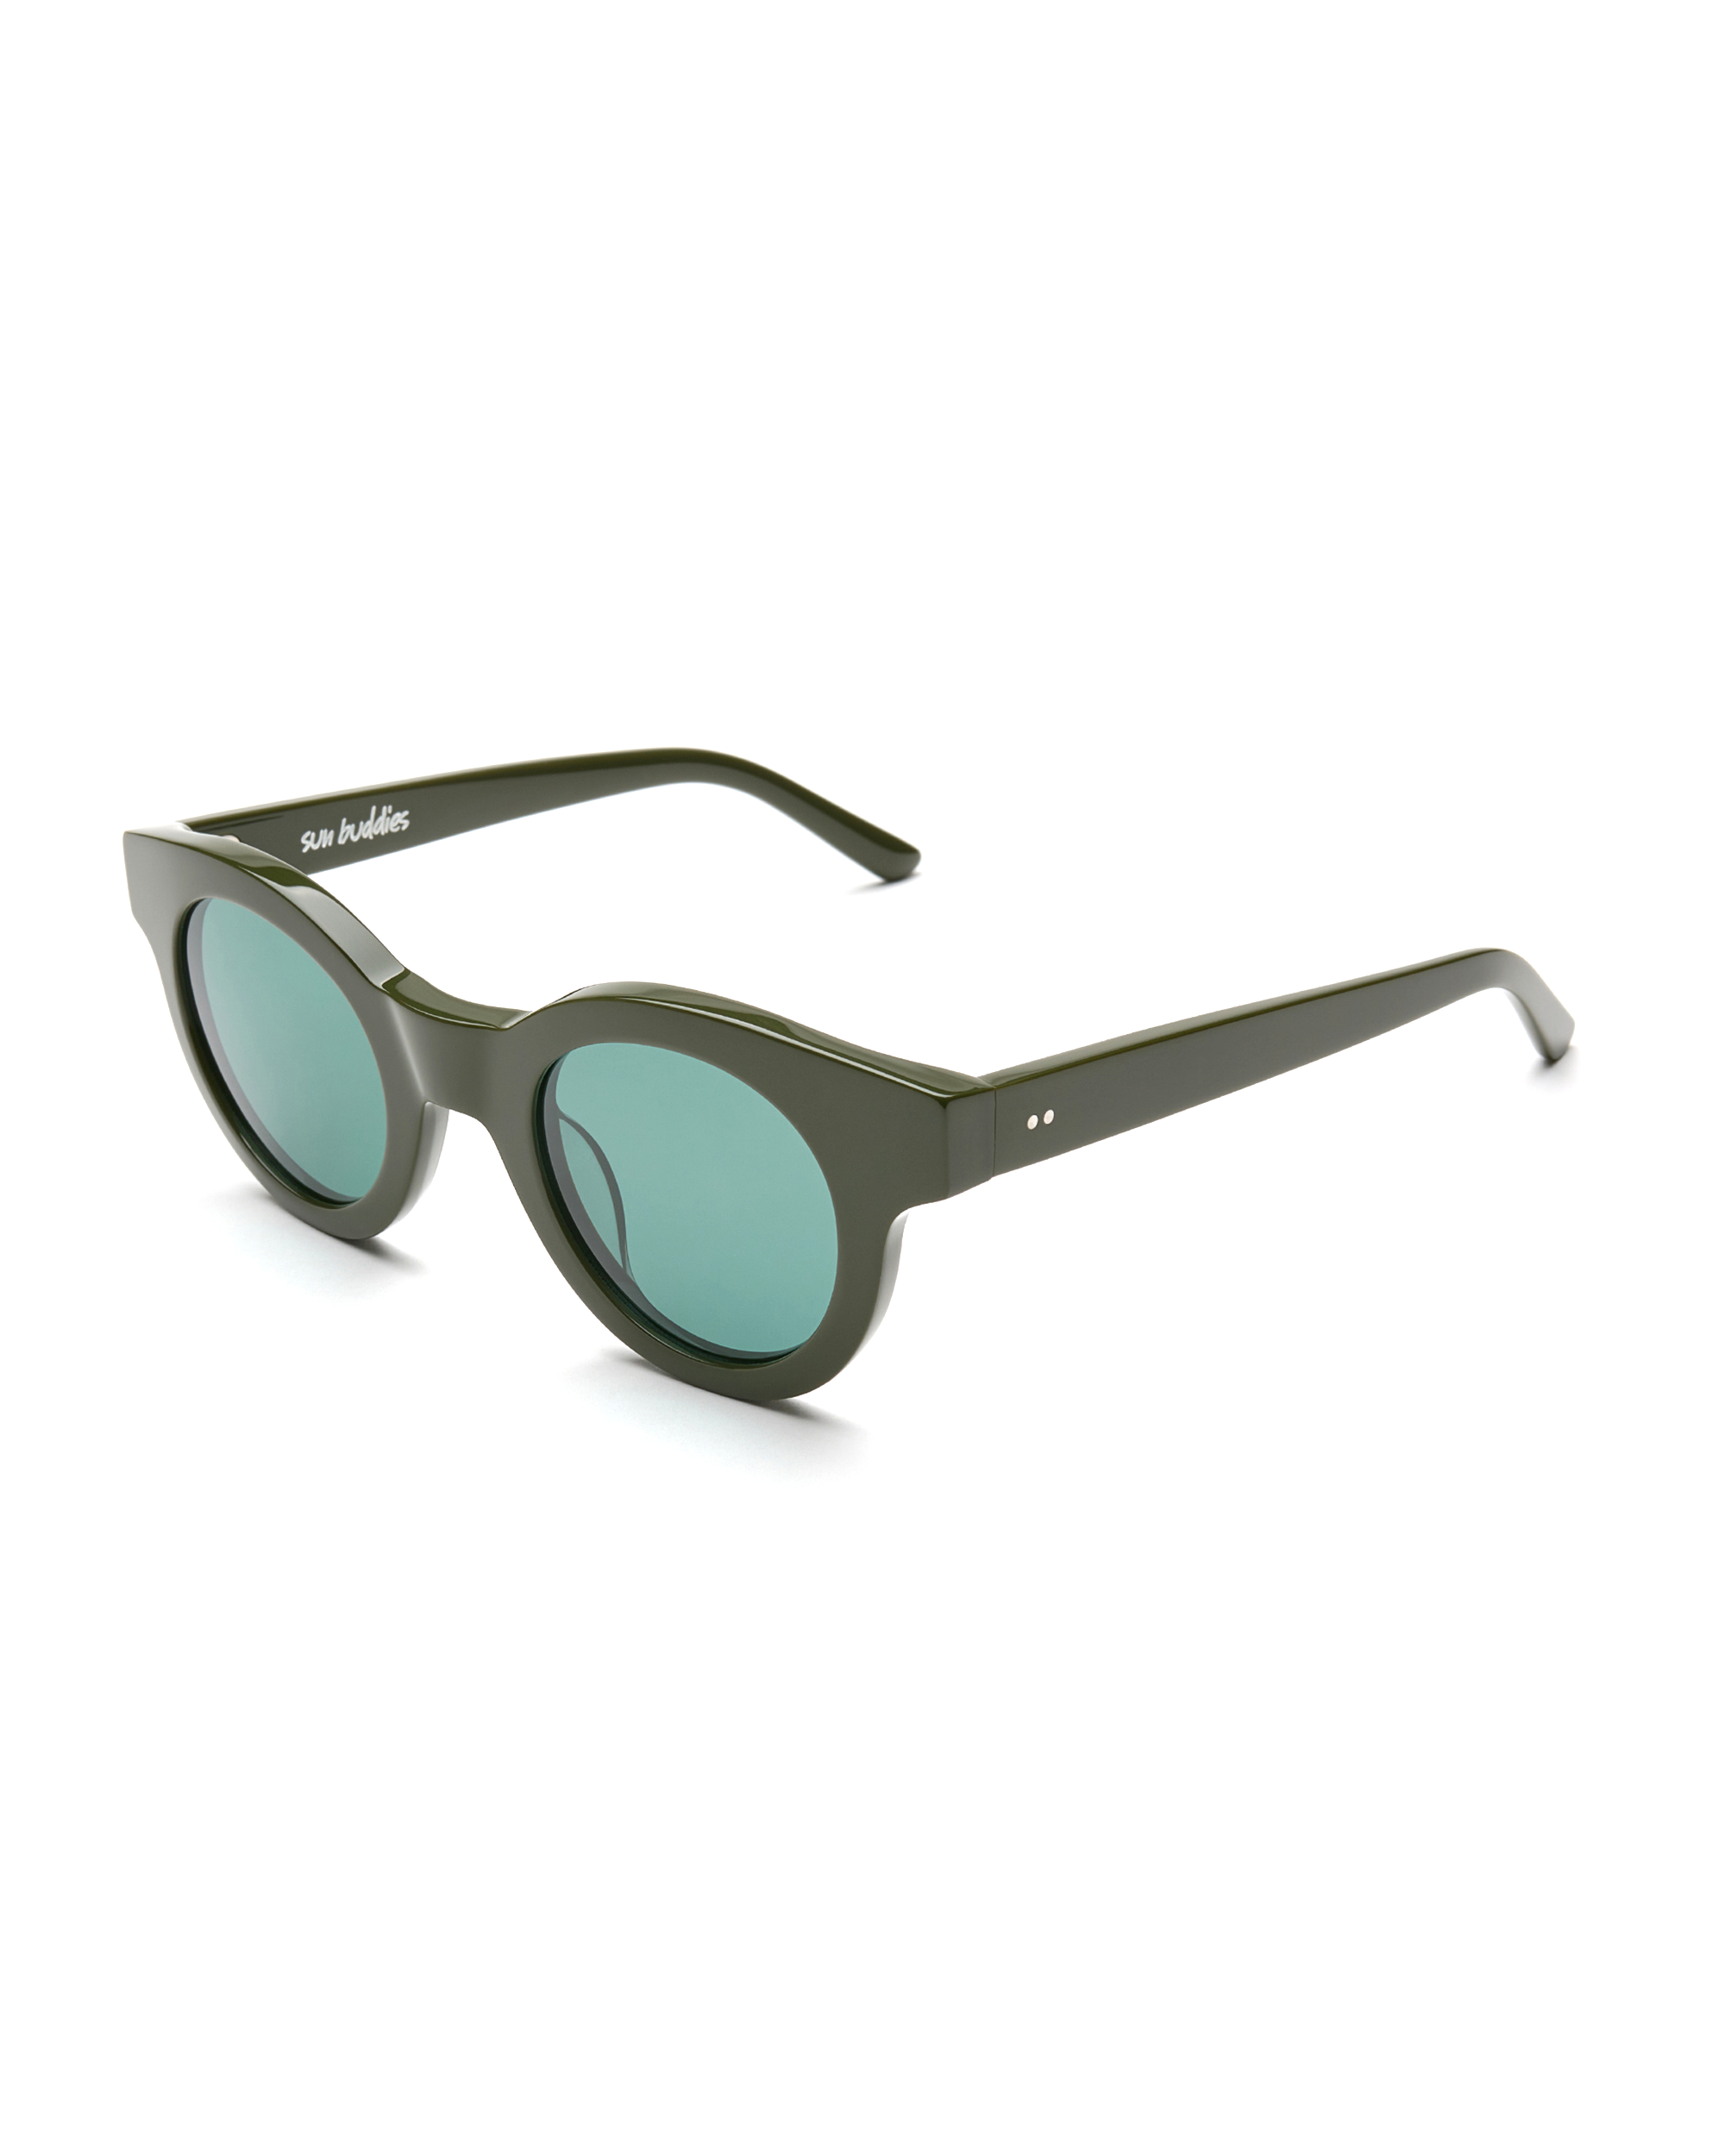 Edie Sunglasses - Solid Green